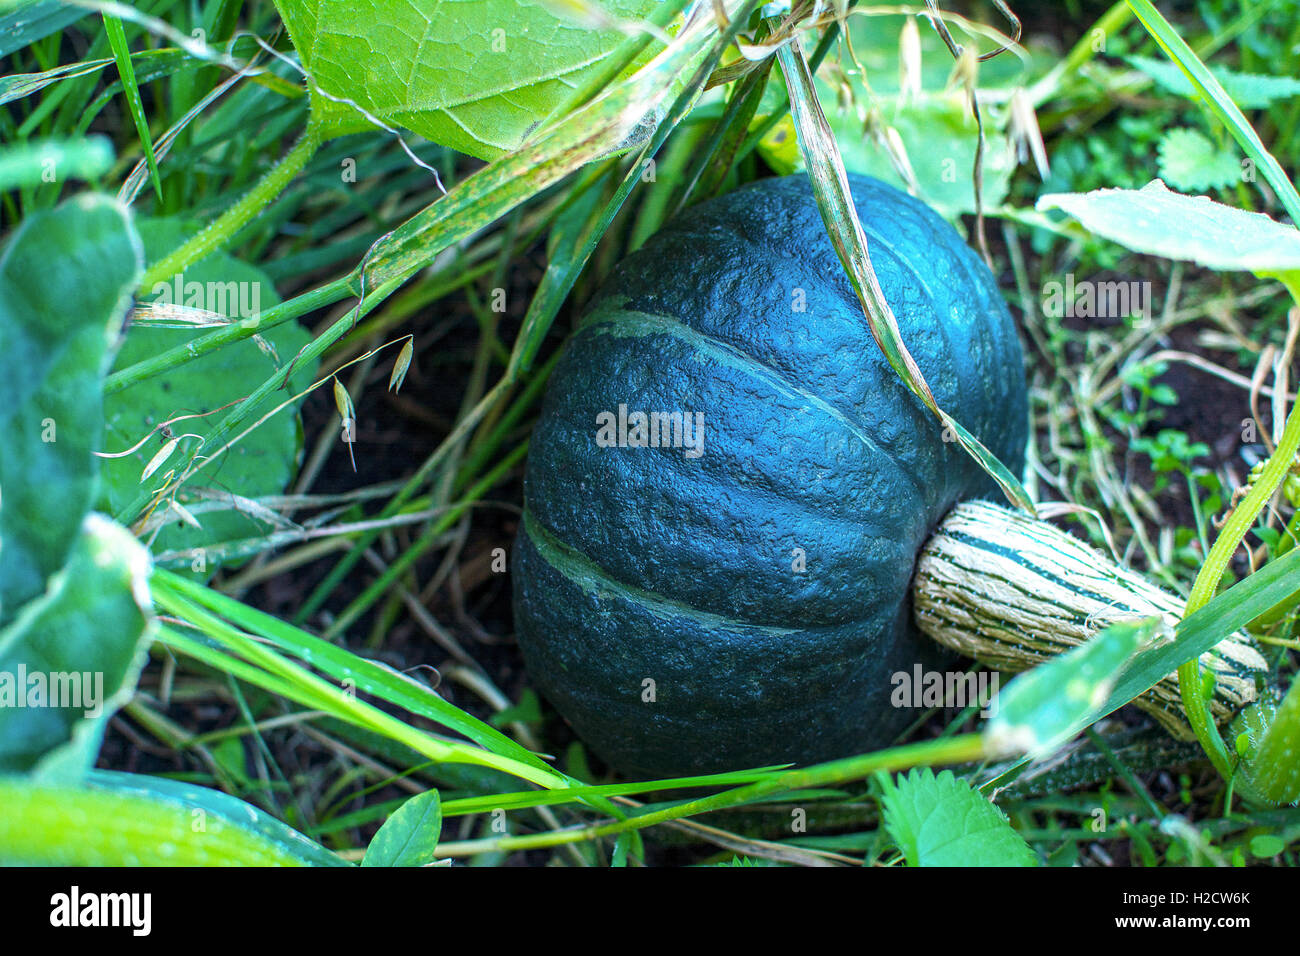 Green pumpkin growing in garden. Cultivated fresh vegetables. Ripe green pumpkin in vegetable garden Stock Photo